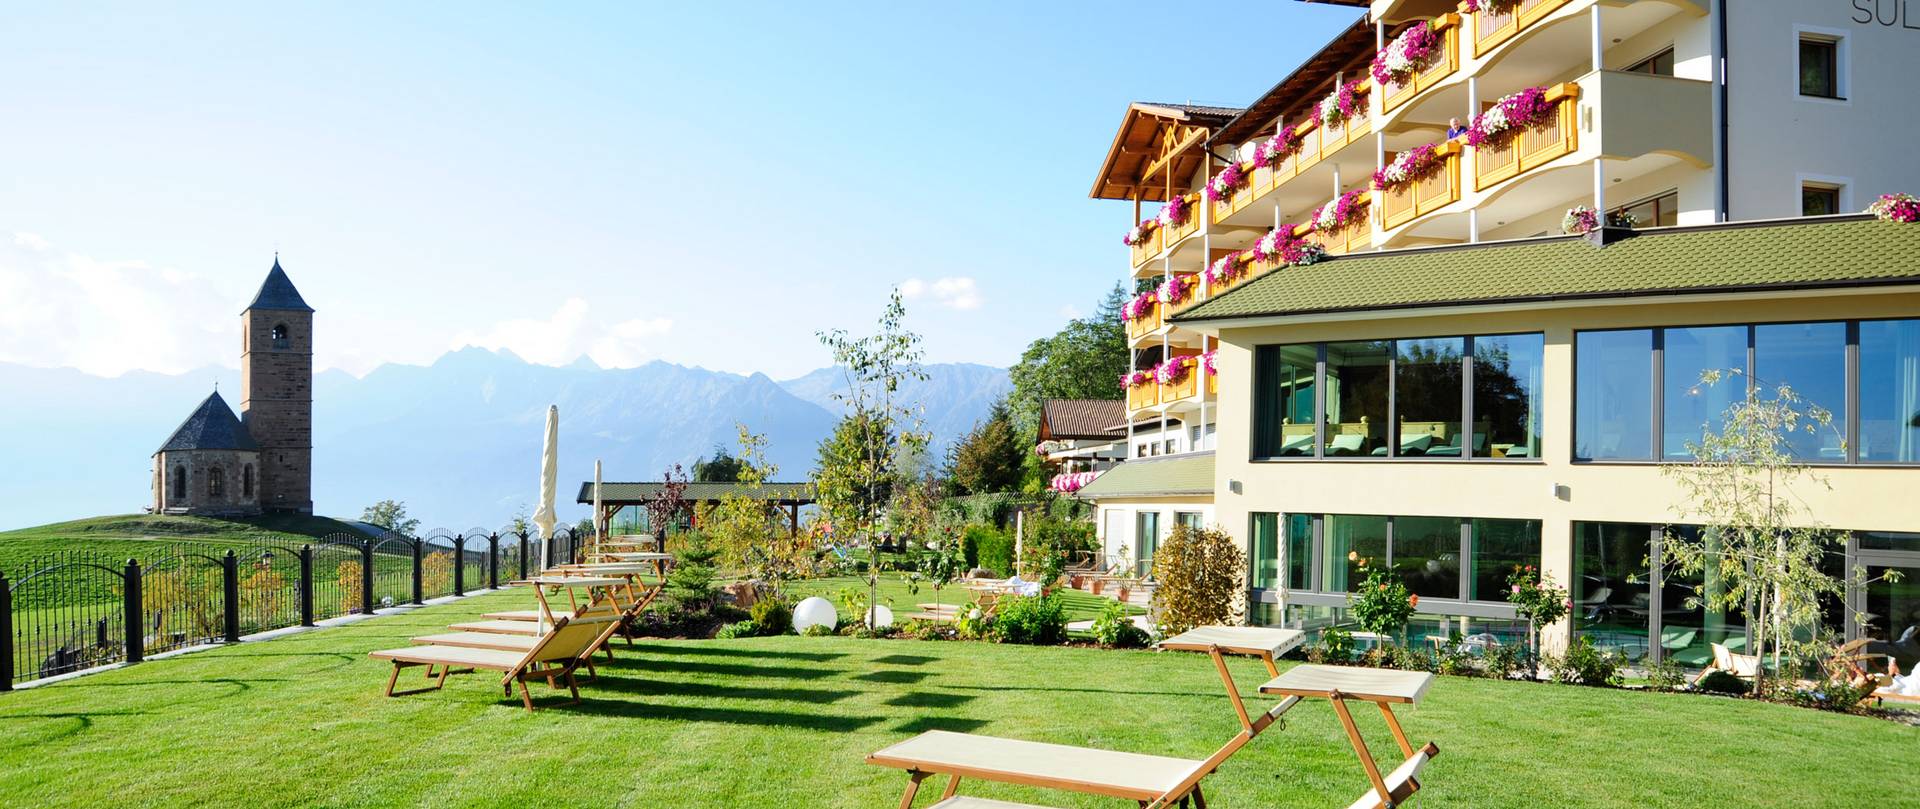 Hafling Hotel Sulfner Liegewiese | Avelengo Hotel Sulfner prato per prendere il sole | Hafling Hotel Sulfner sunbathing lawn